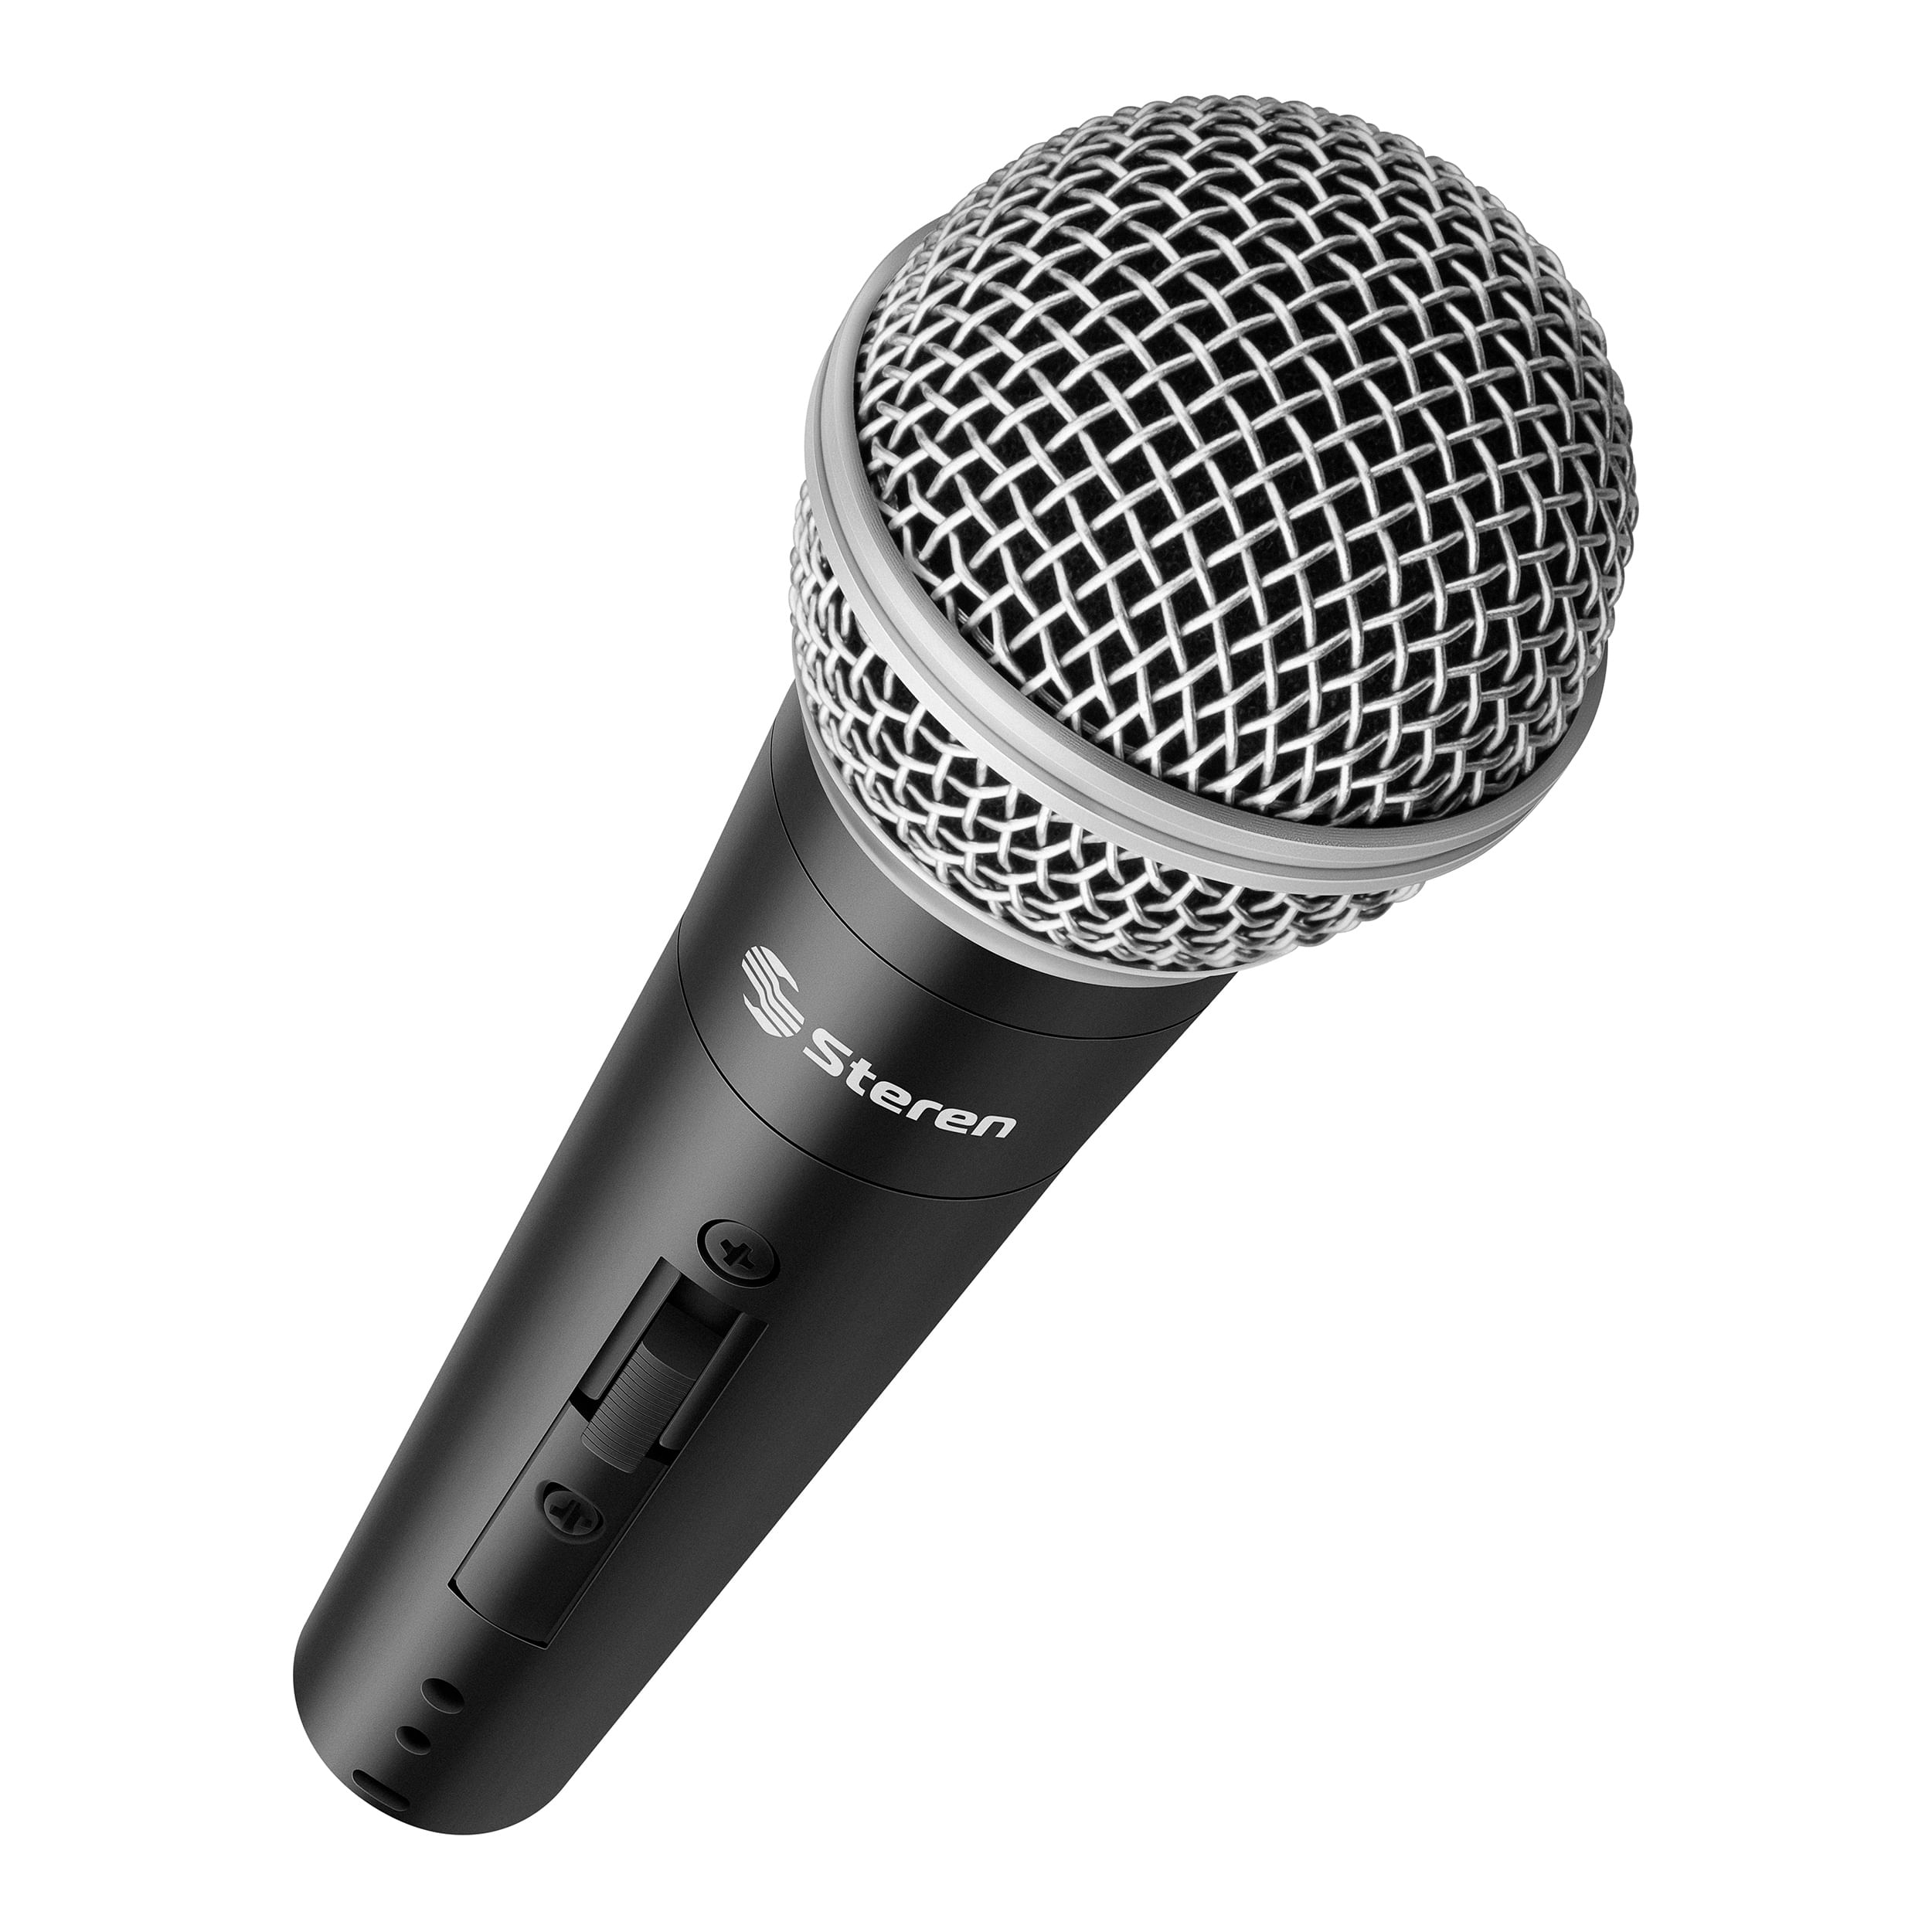 Micrófono profesional para voz - Steren Colombia